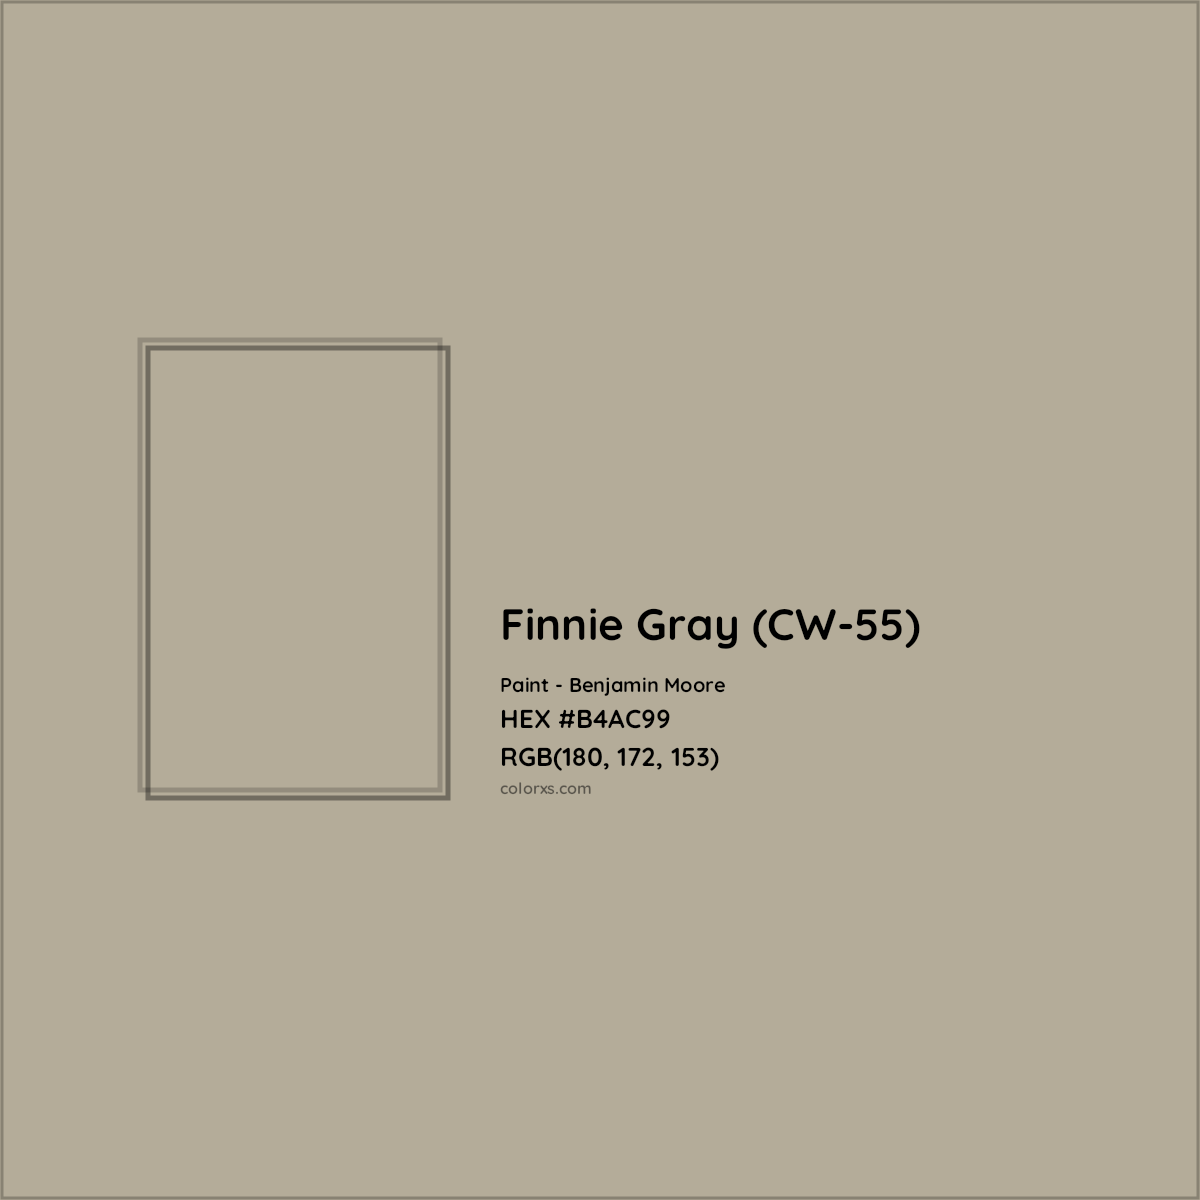 HEX #B4AC99 Finnie Gray (CW-55) Paint Benjamin Moore - Color Code